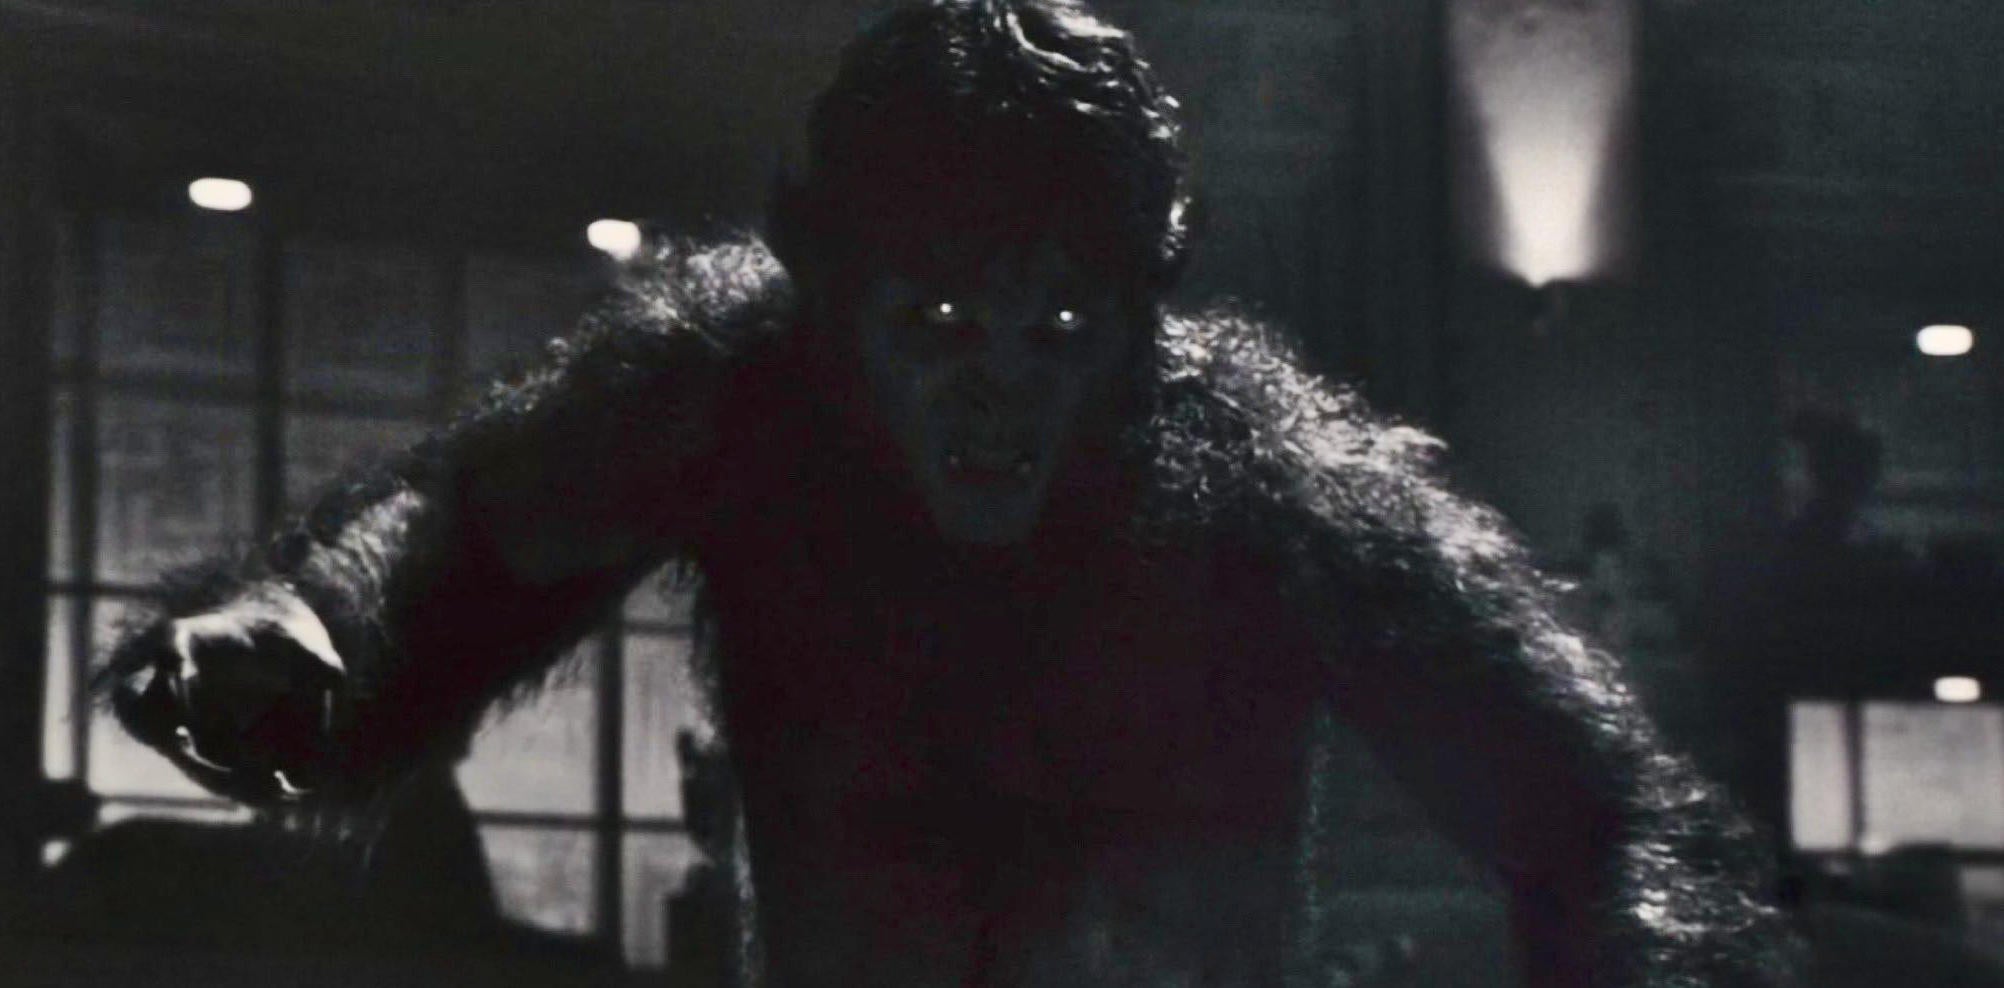 Marvel's “Werewolf by Night in Color” Disney+ Original Trailer